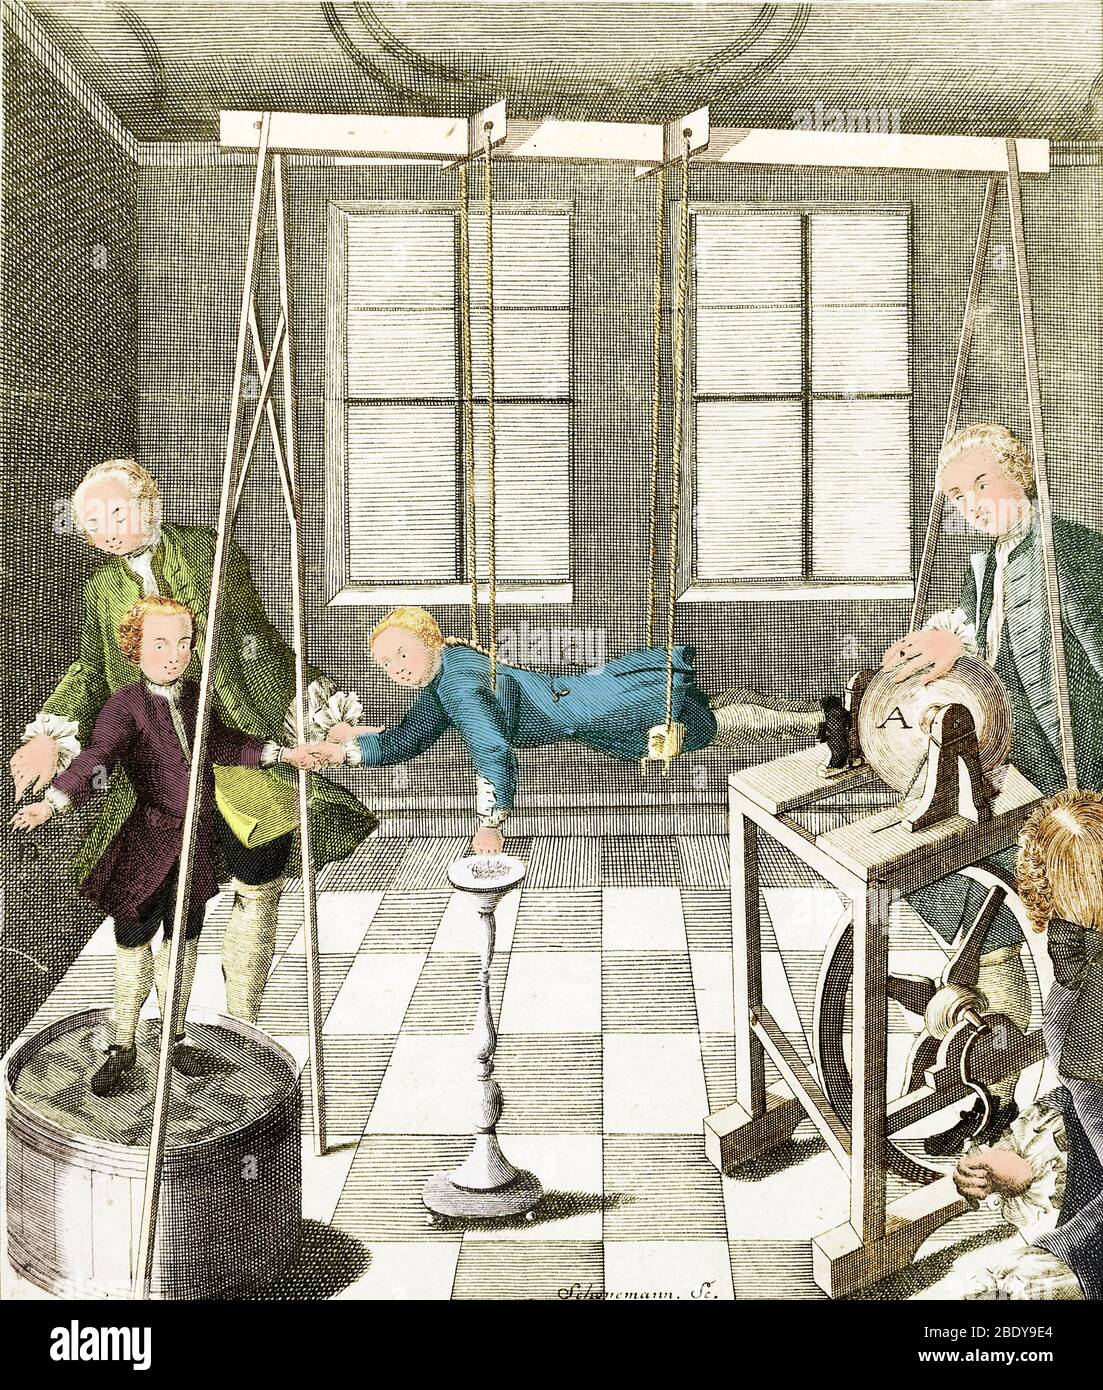 Christian August Hausen, macchina elettrica, 1743 Foto Stock